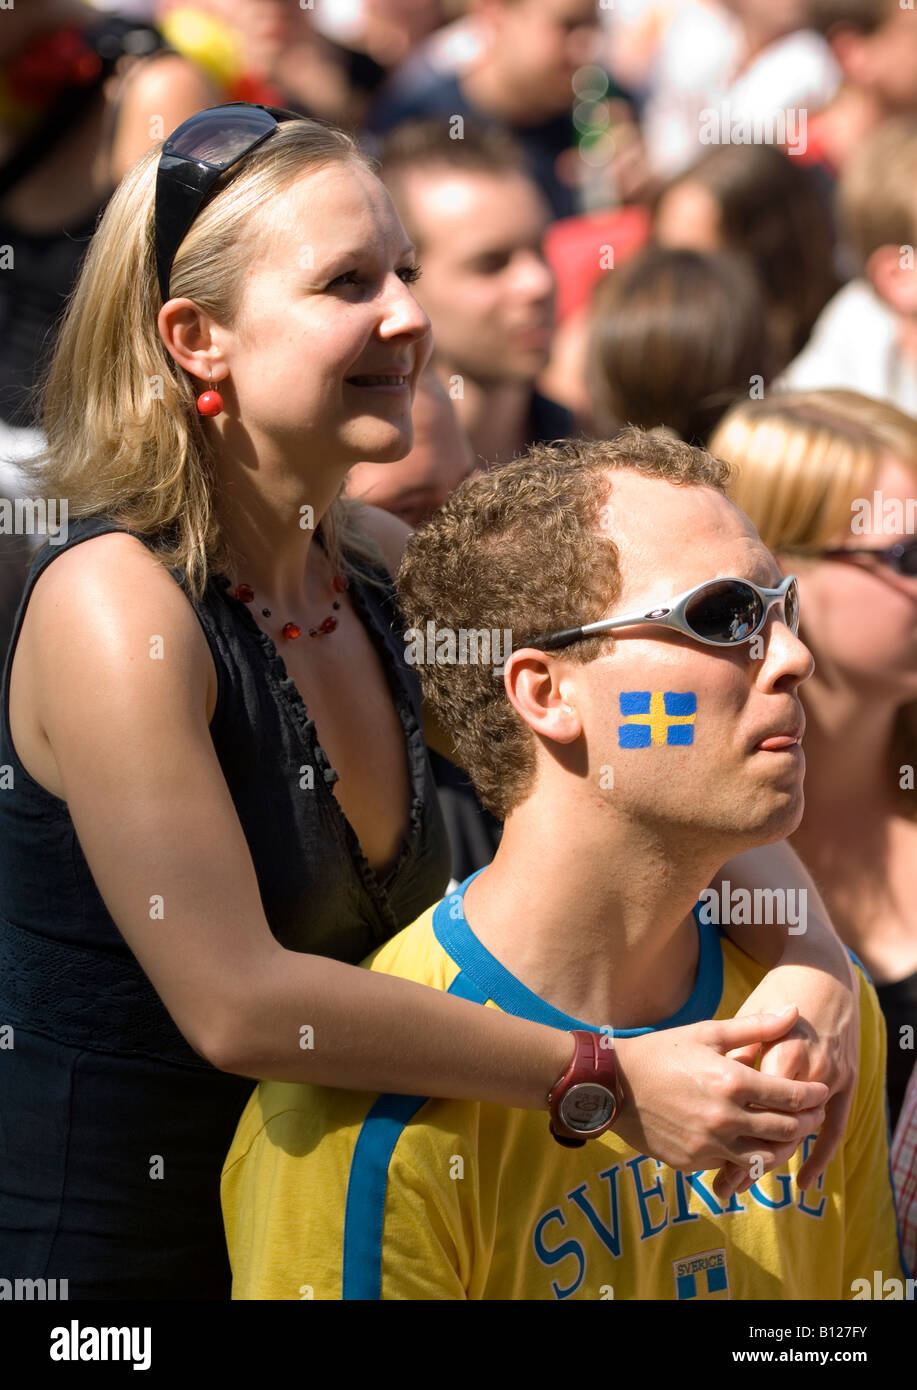 Swedish Football fans Stock Photo